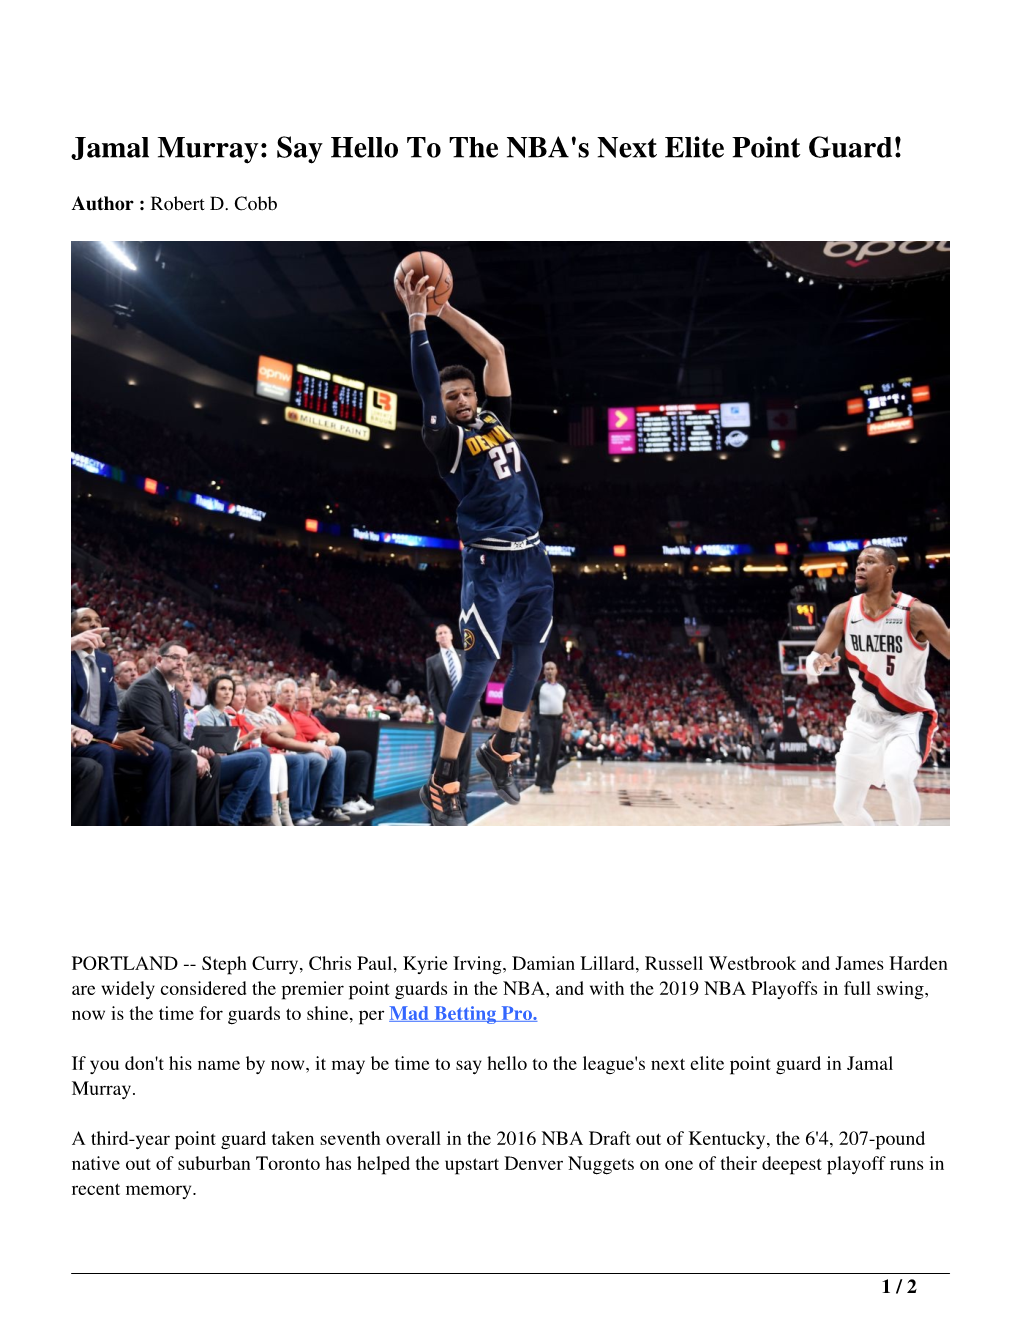 Jamal Murray: Say Hello to the NBA's Next Elite Point Guard!